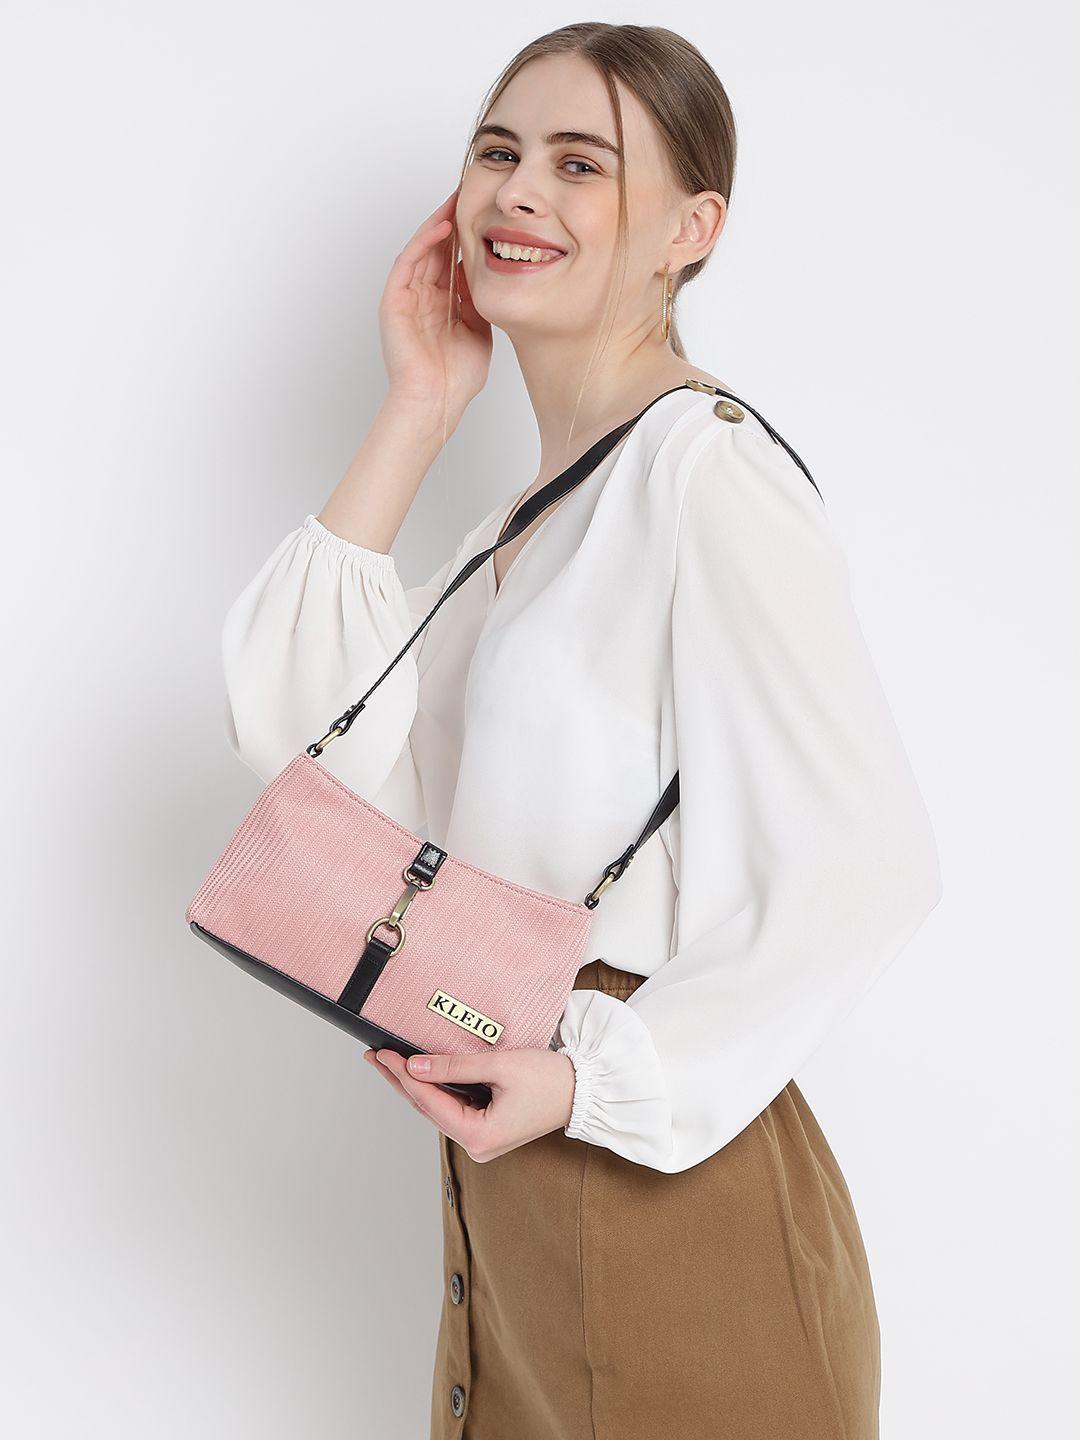 kleio-pink-self-striped-shoulder-bag-with-buckle-detail